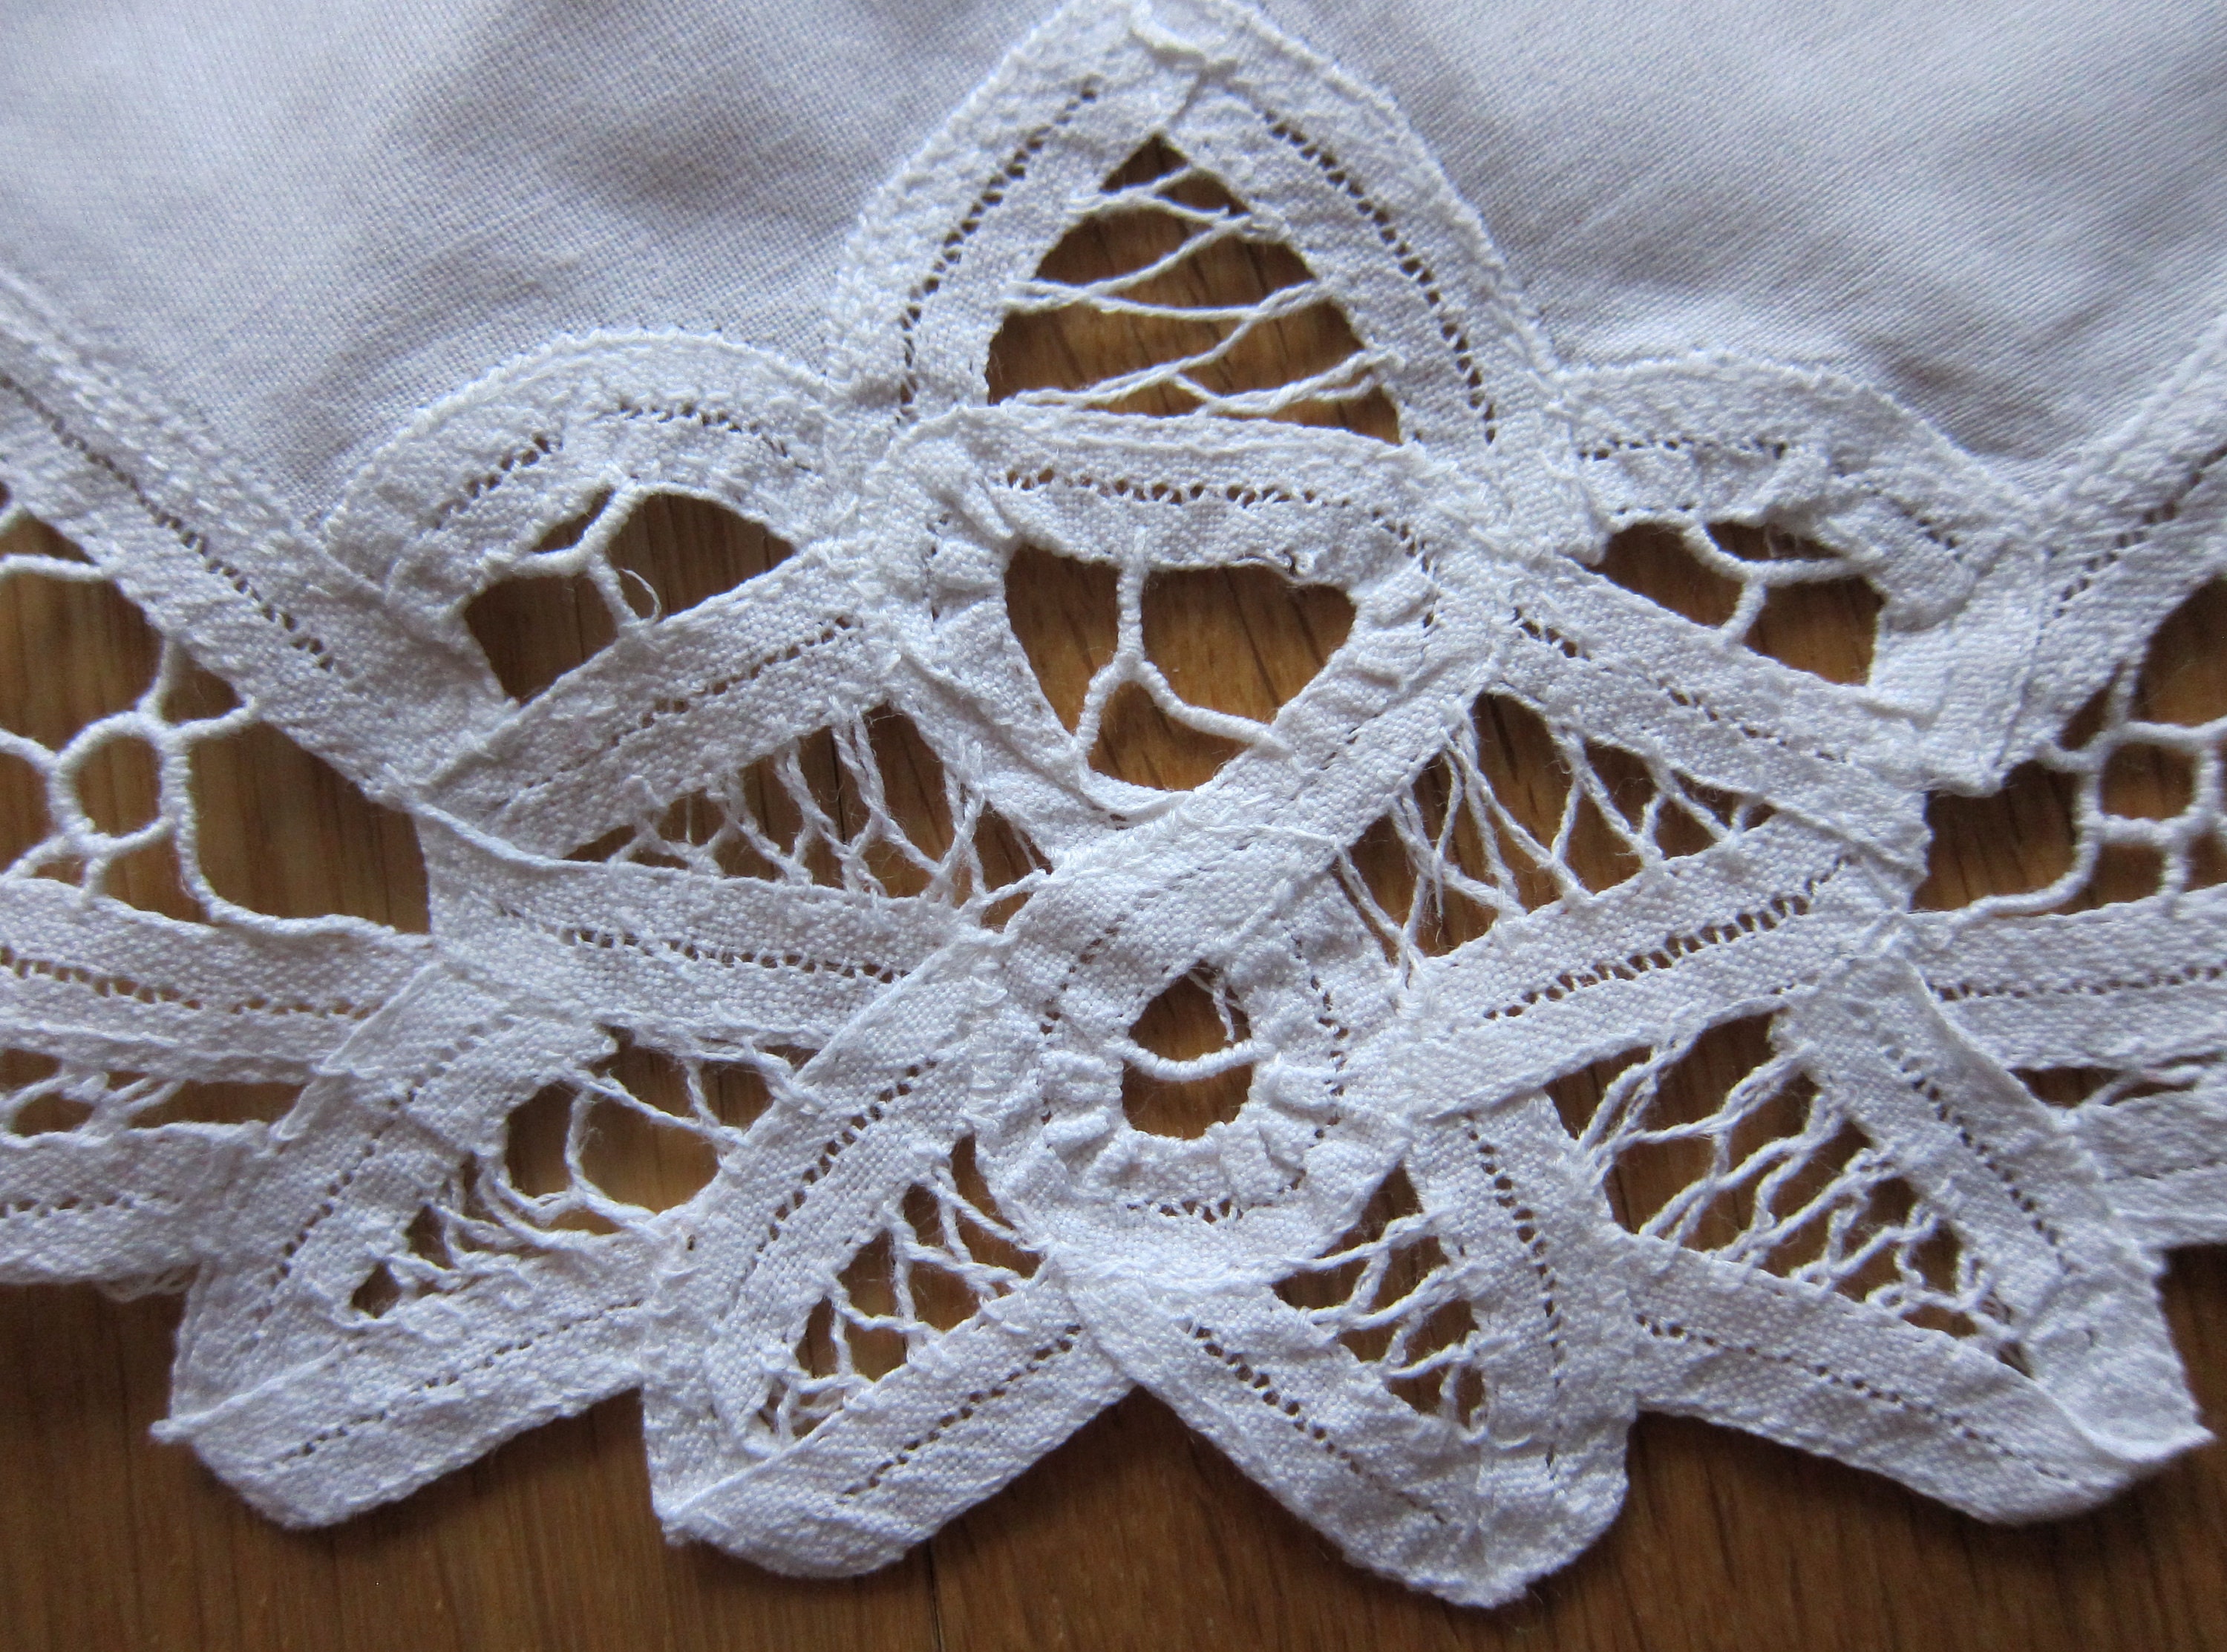 Handmade Battenburg Lace Doily 14" Round White Cotton 